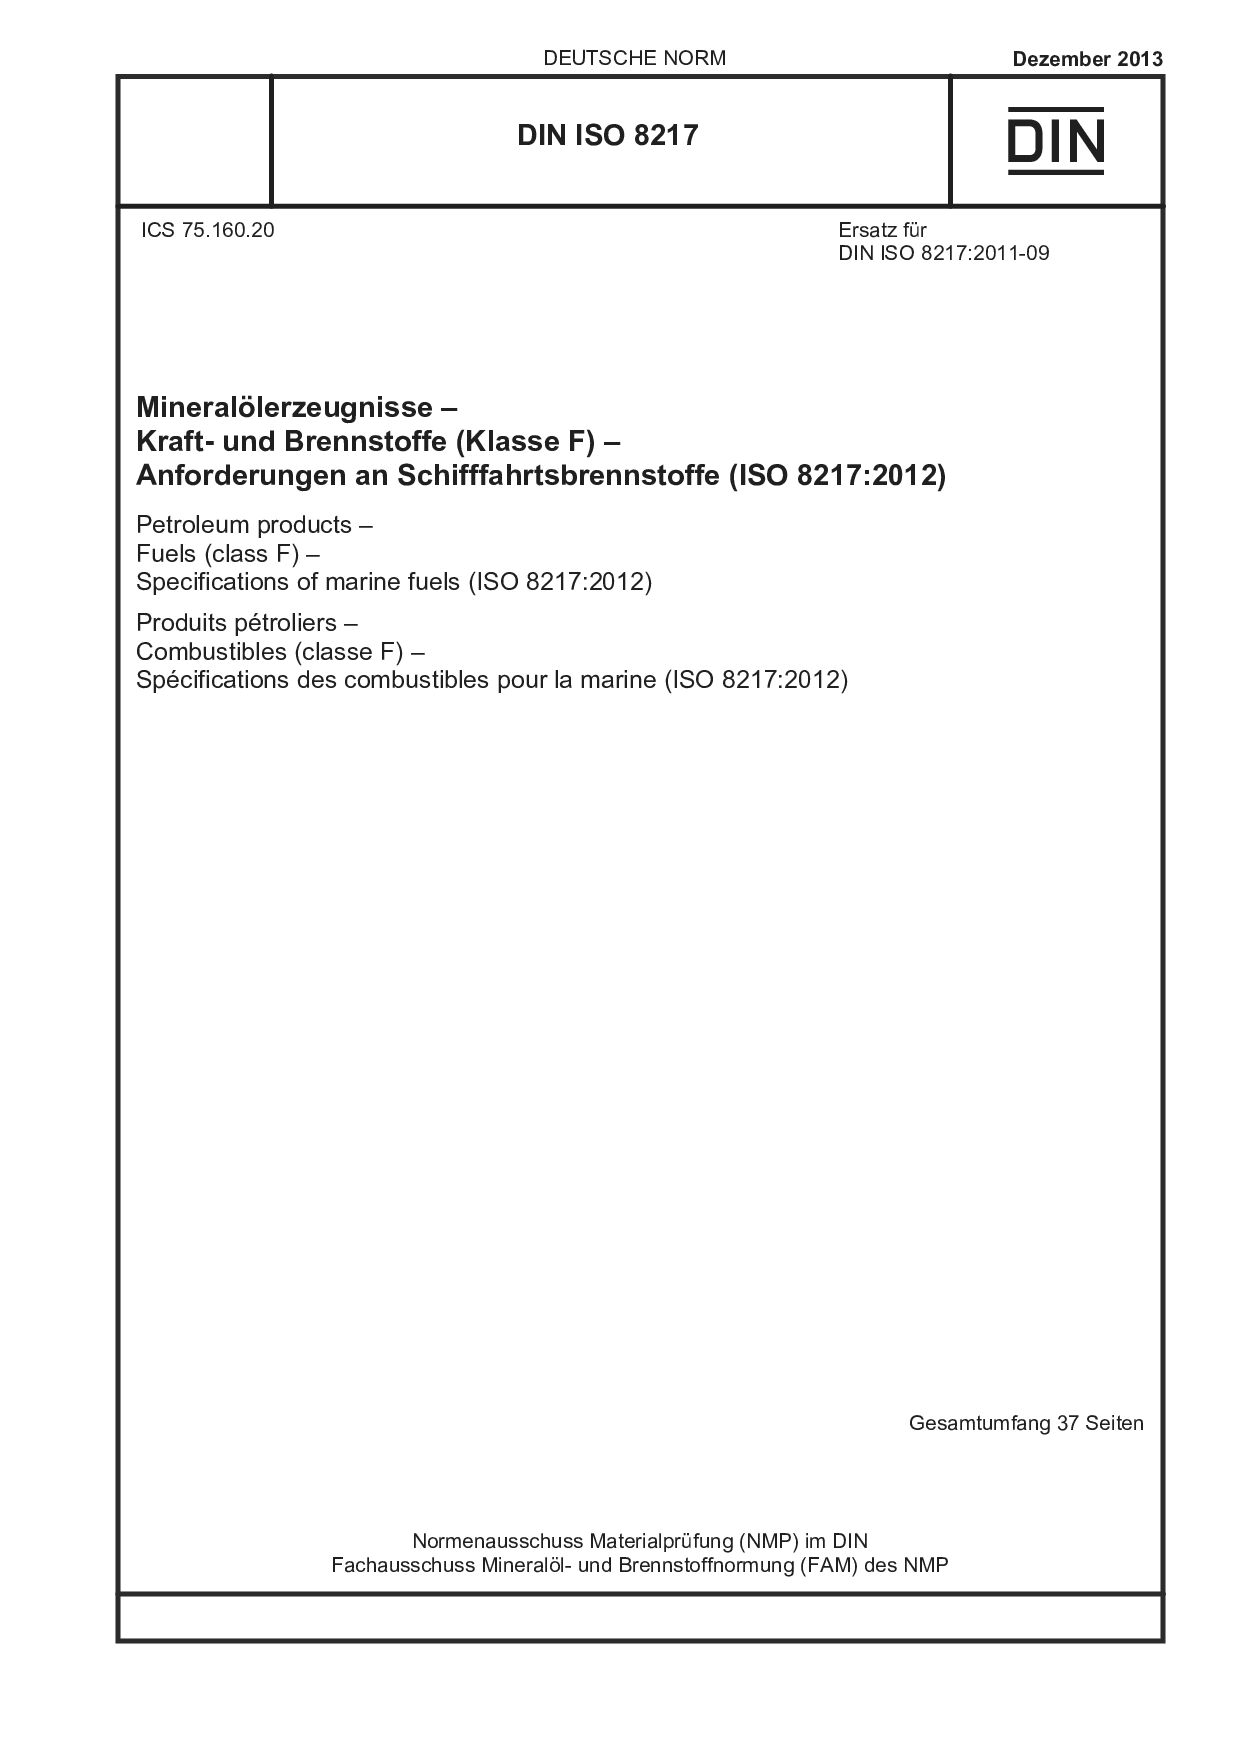 DIN ISO 8217:2013